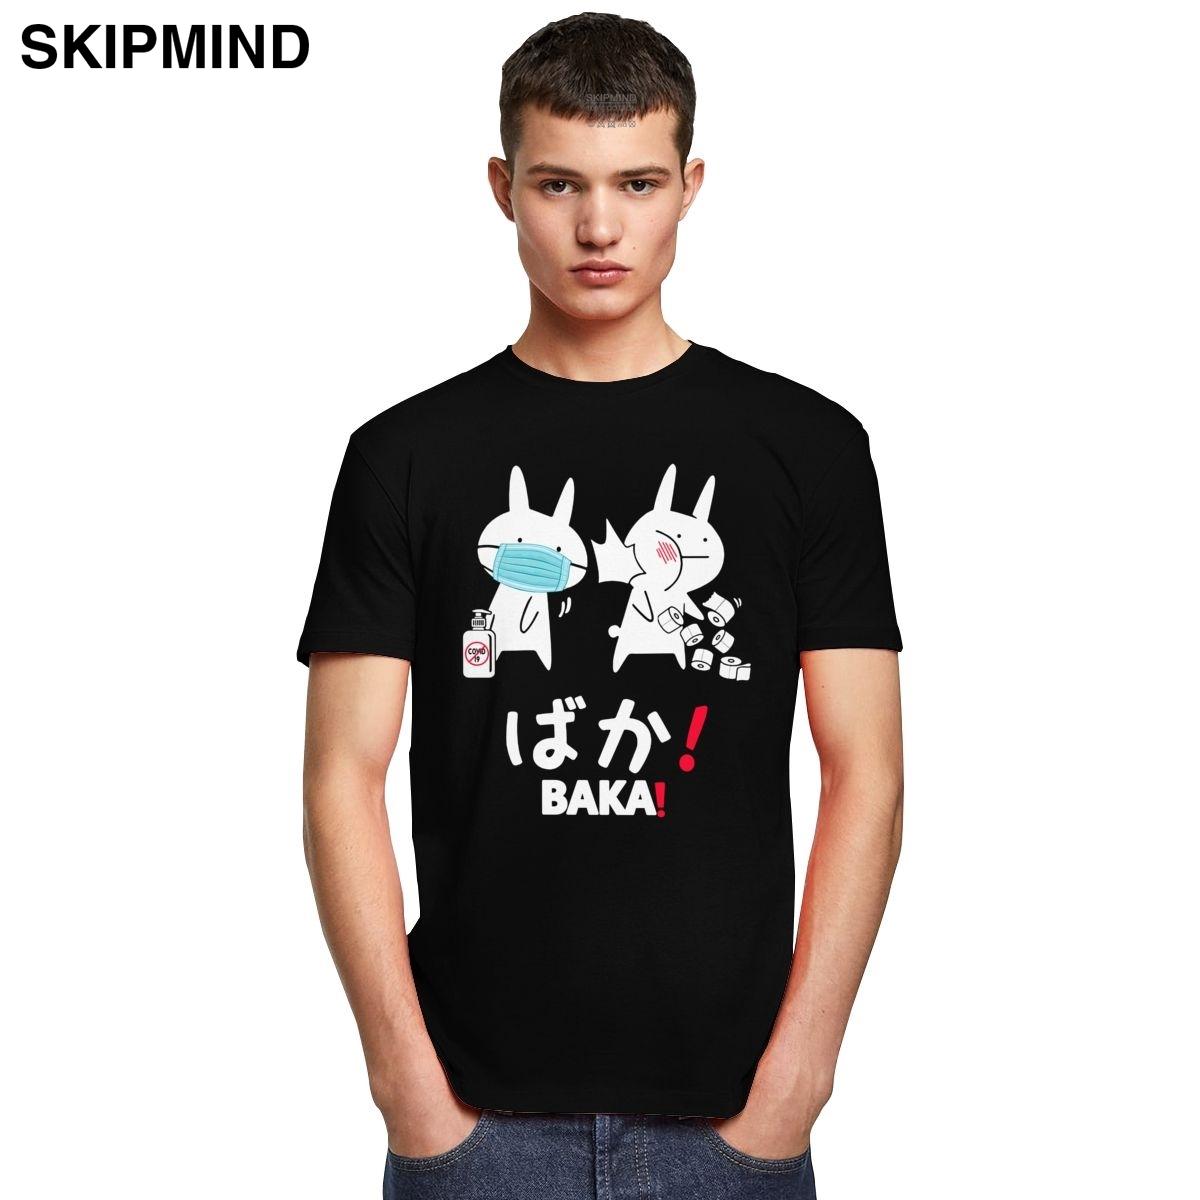 Изображение товара: Забавная Мужская футболка Baka с изображением кролика Slap, 100% хлопок, с коротким рукавом, футболки с японским аниме, с мемом, футболки для фанатов манги, футболка, одежда в подарок